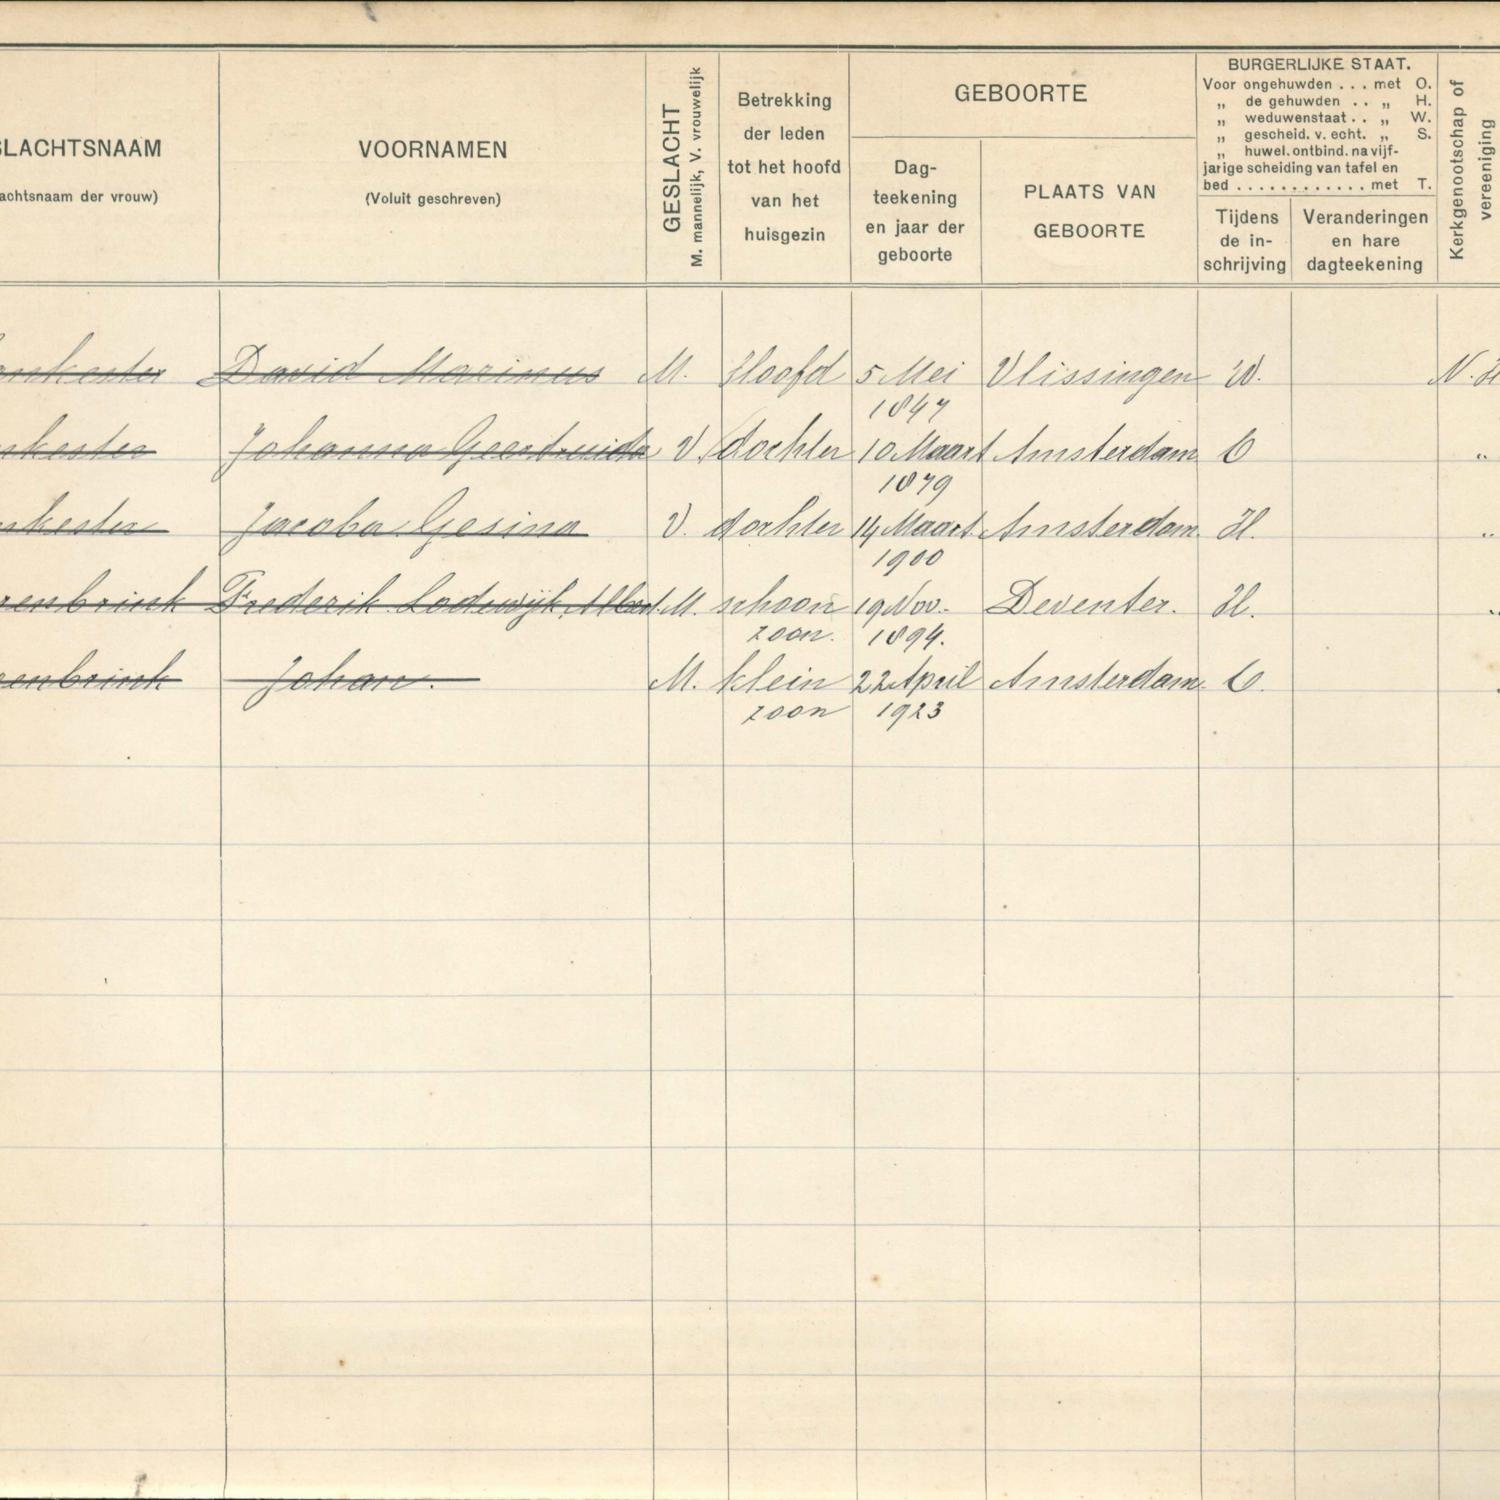 Civil registry, Ilpendam, 1850-1939, 43a-43b, sheet 565 (left)